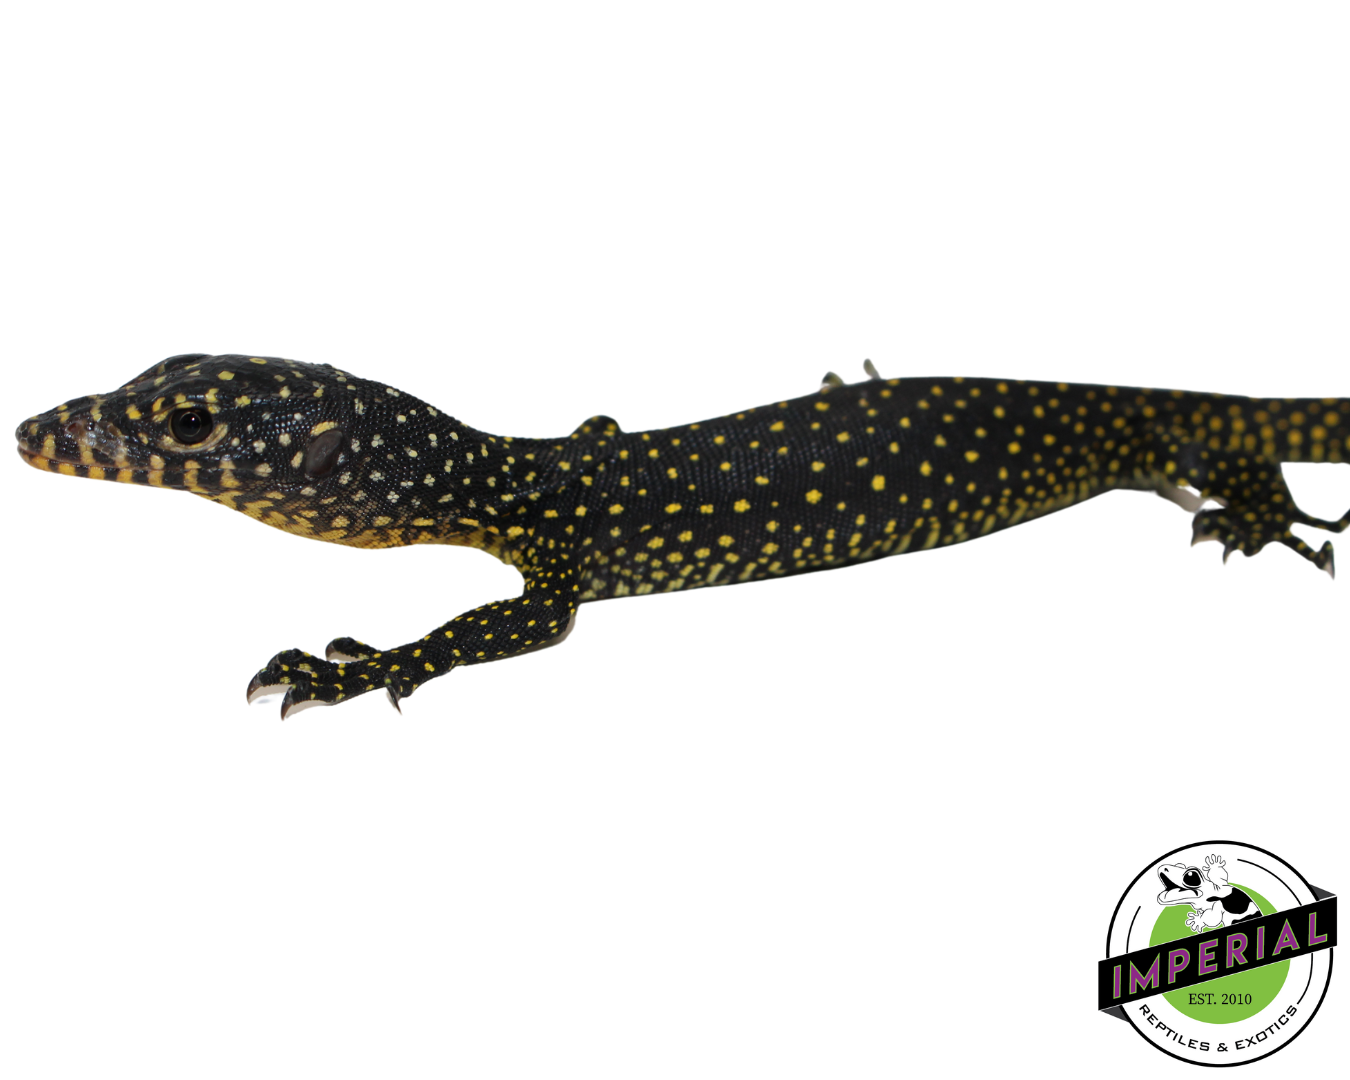 warsior mangrove monitor lizard for sale, buy reptiles online